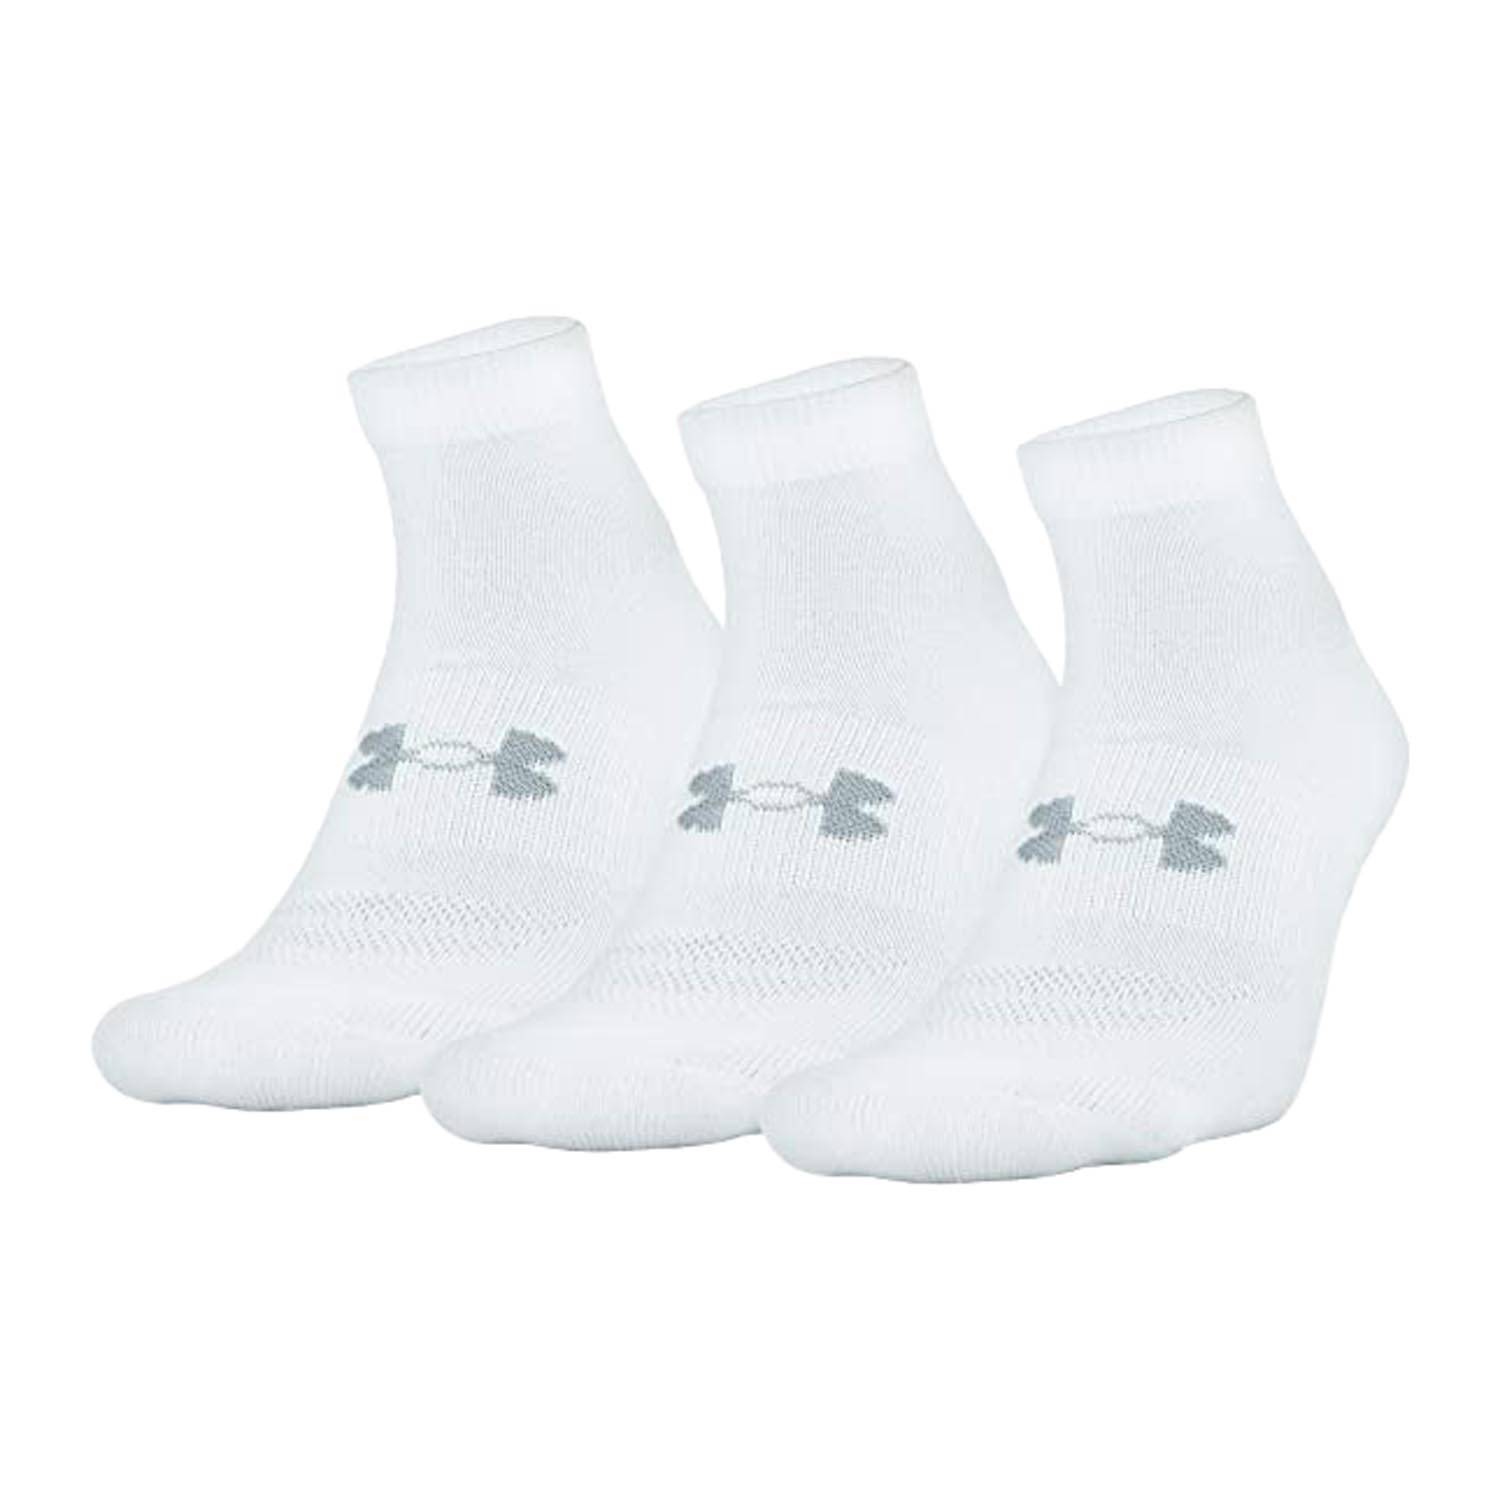 Under Armour Uniform Athletic Low Cut Socks (3 pack)